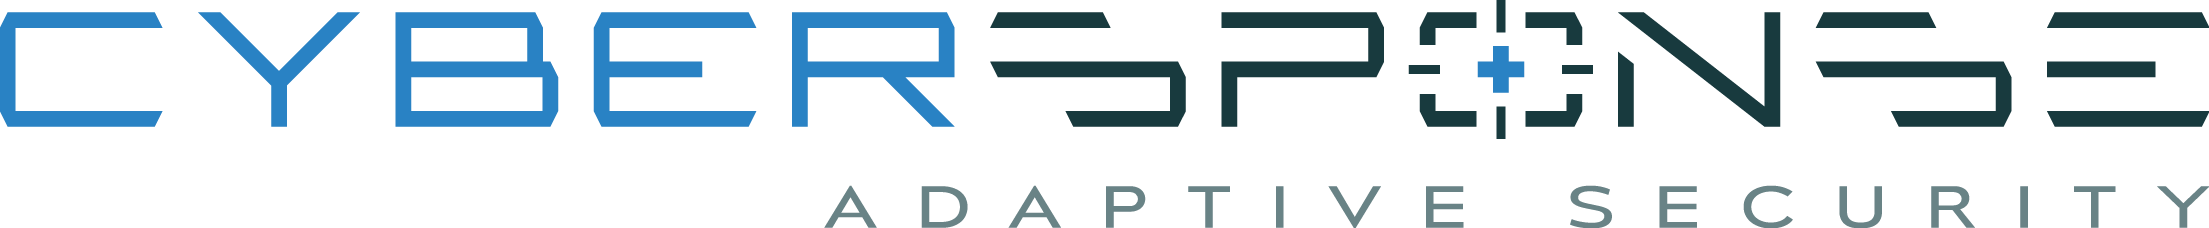 CyberSponse, Inc. logo